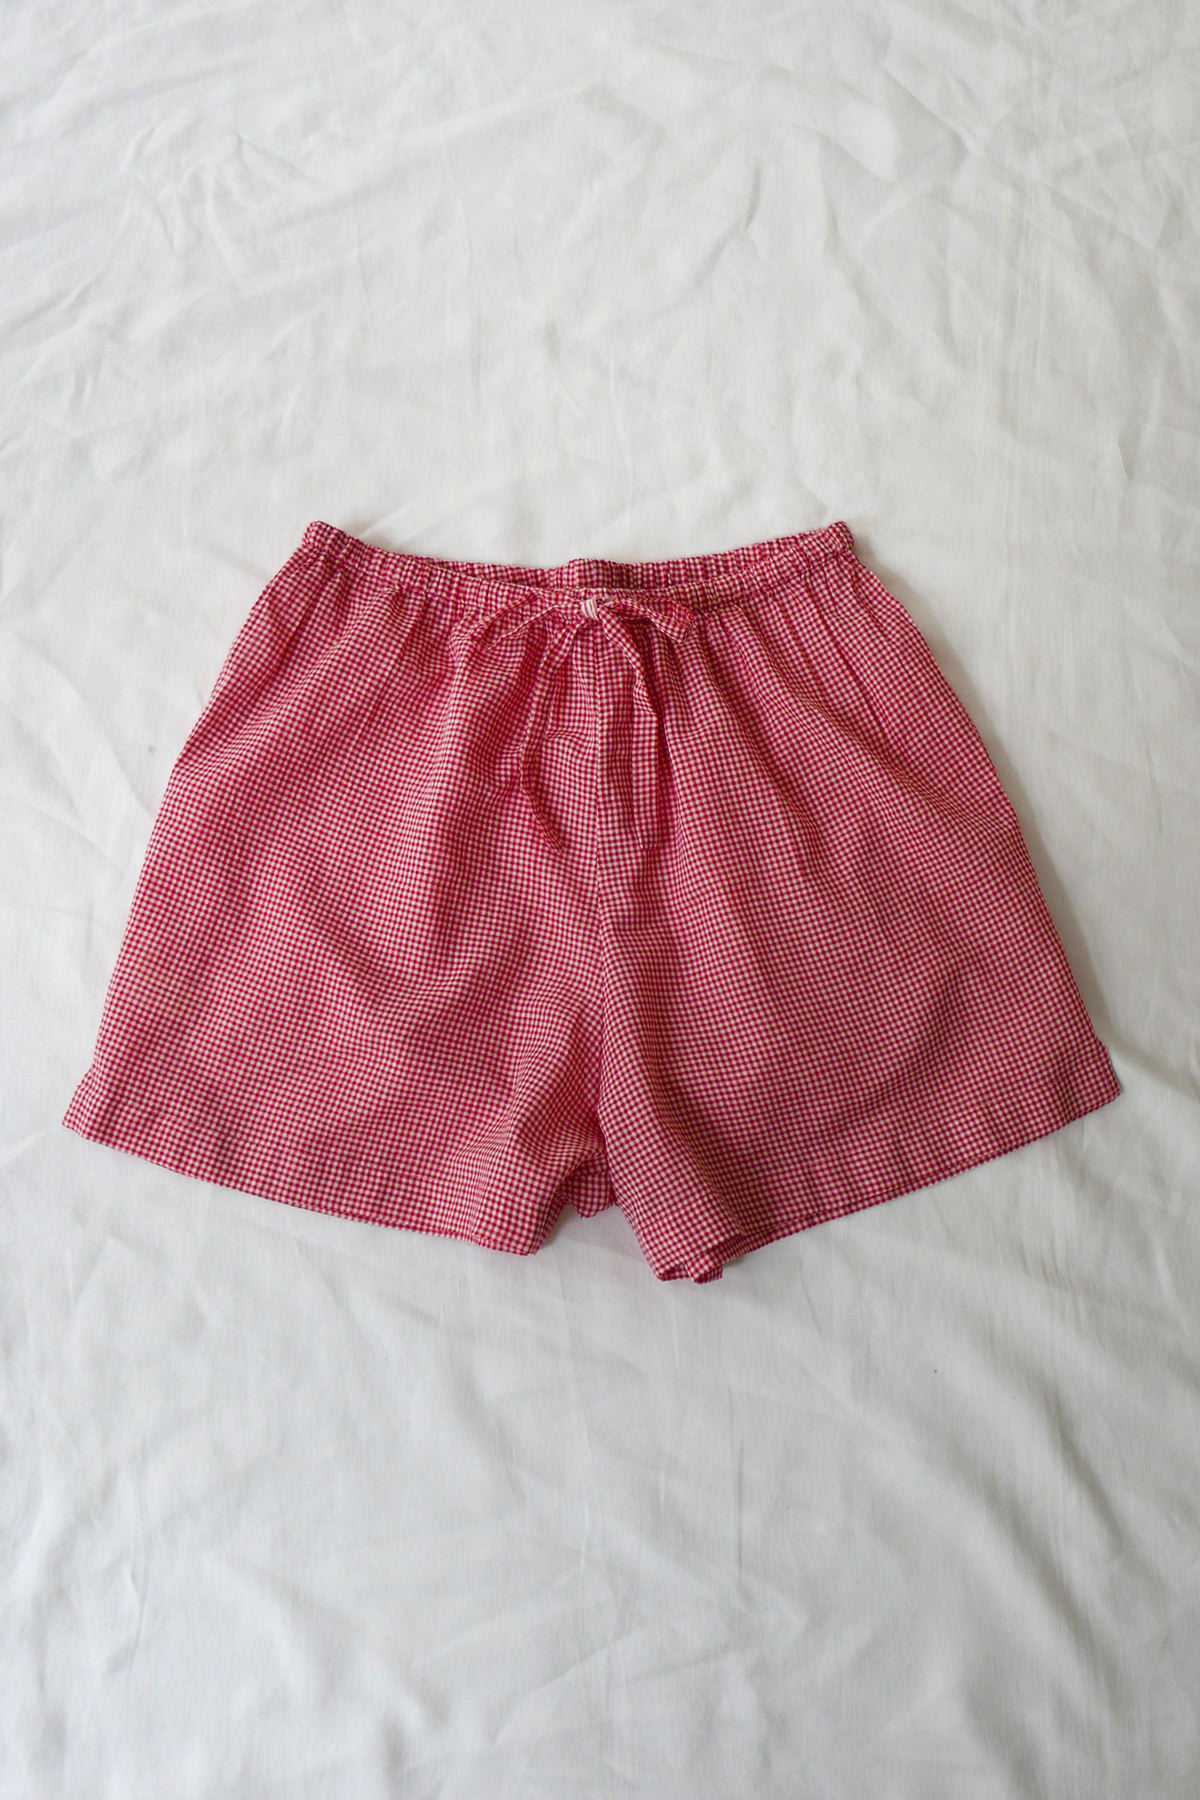 Runaway Bicycle Handloom Cotton Pajama Shorts Red gingham Check